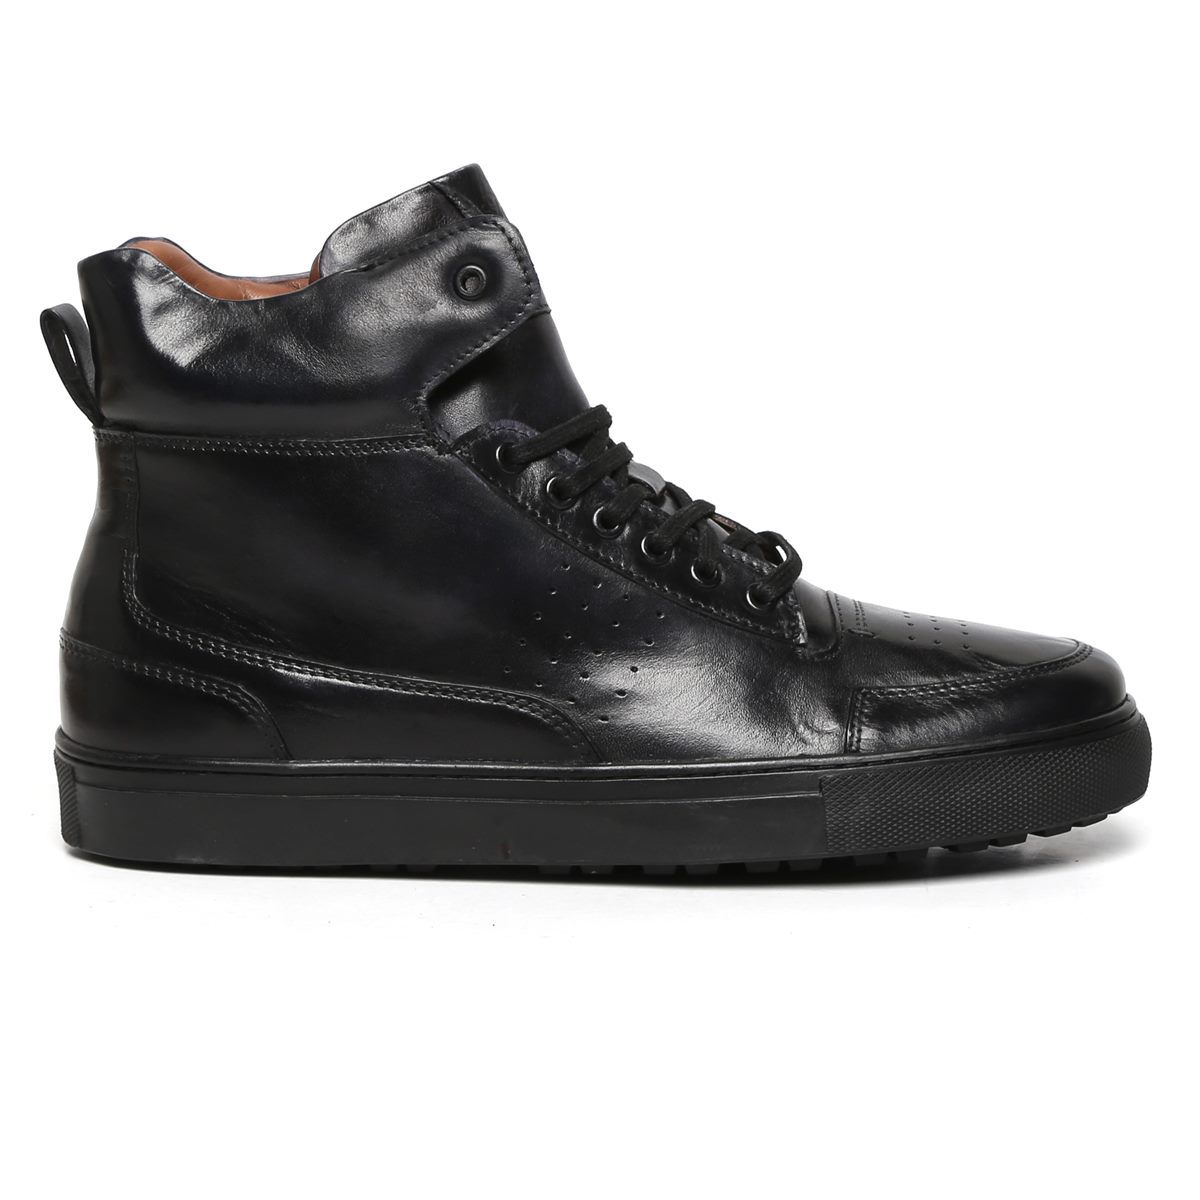 Bareskin Black leather high ankel shoe Lifestyle Black Casual Shoes ...